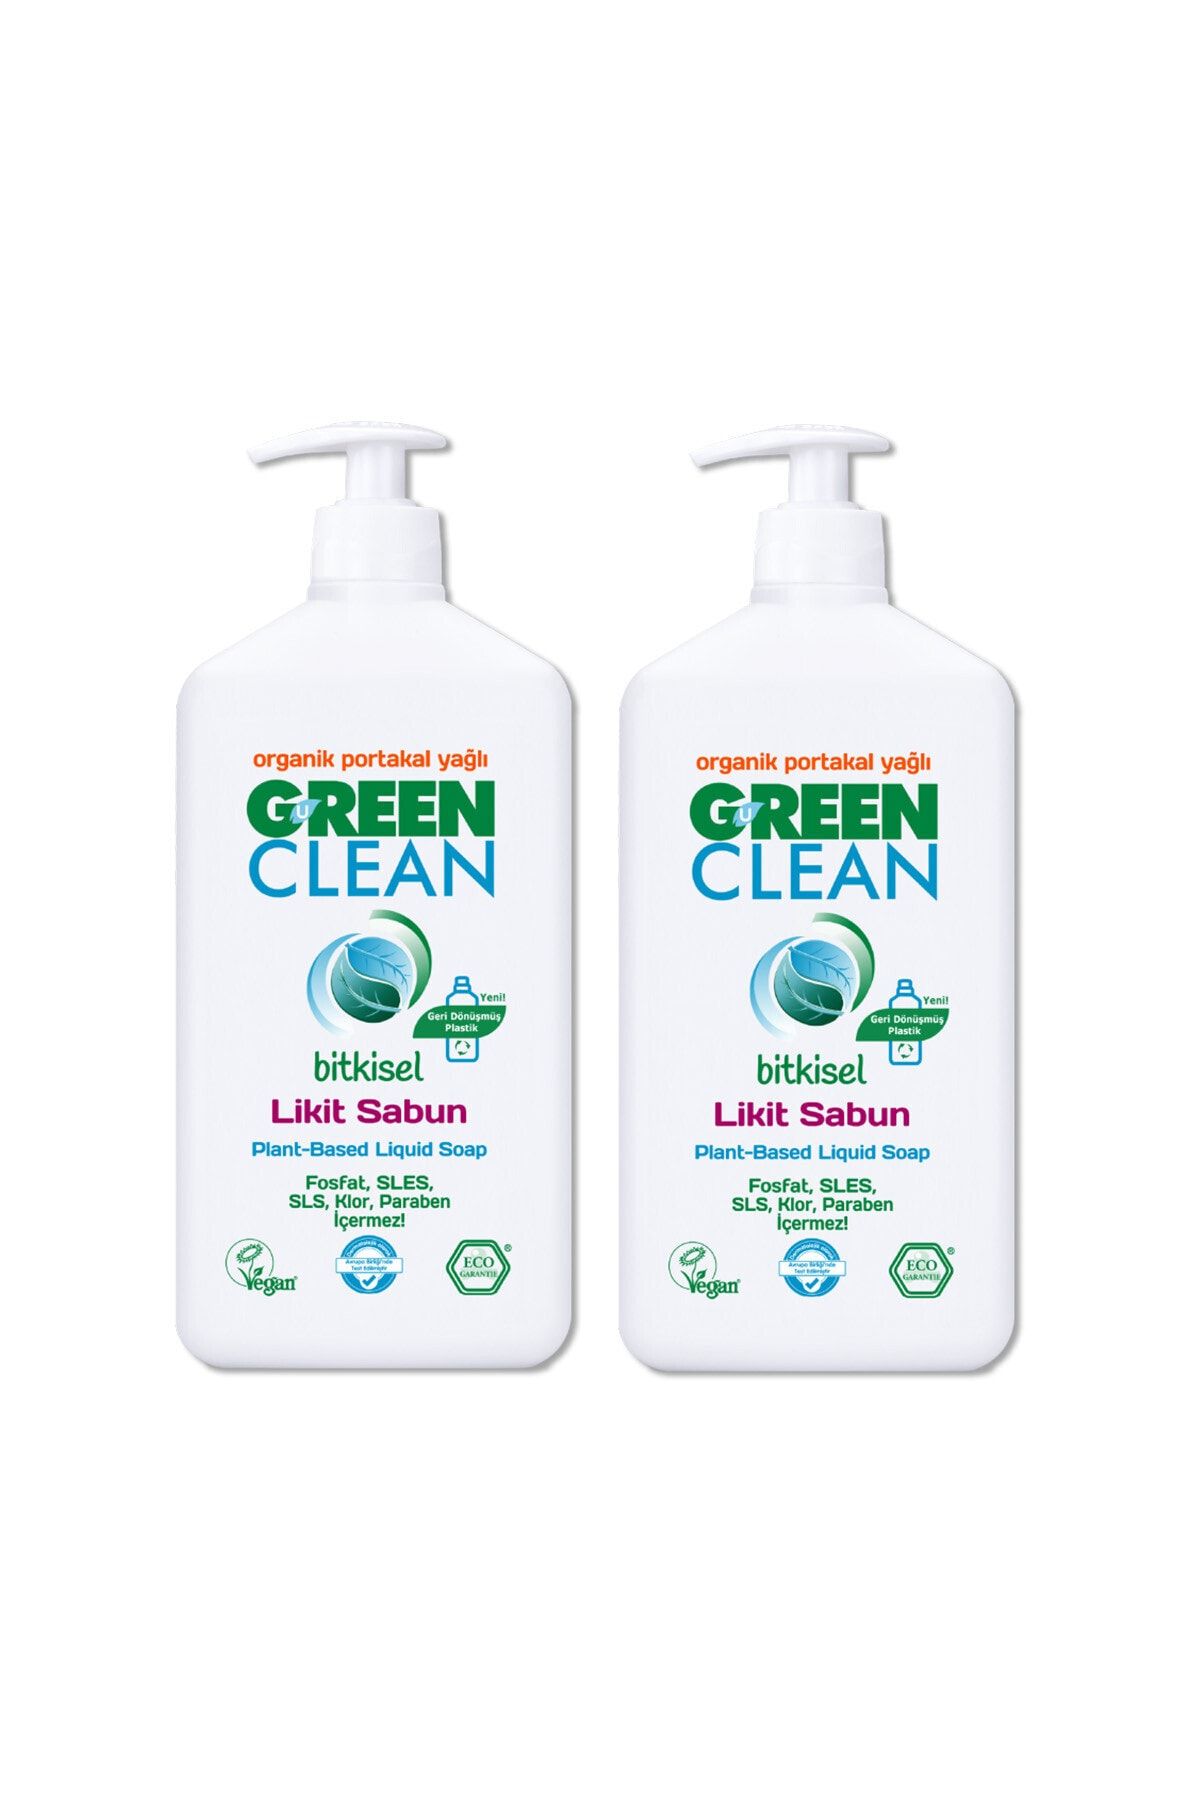 Green Clean Organik Portakal Yağlı Bitkisel Likit El Sabunu 500 ml 2'li